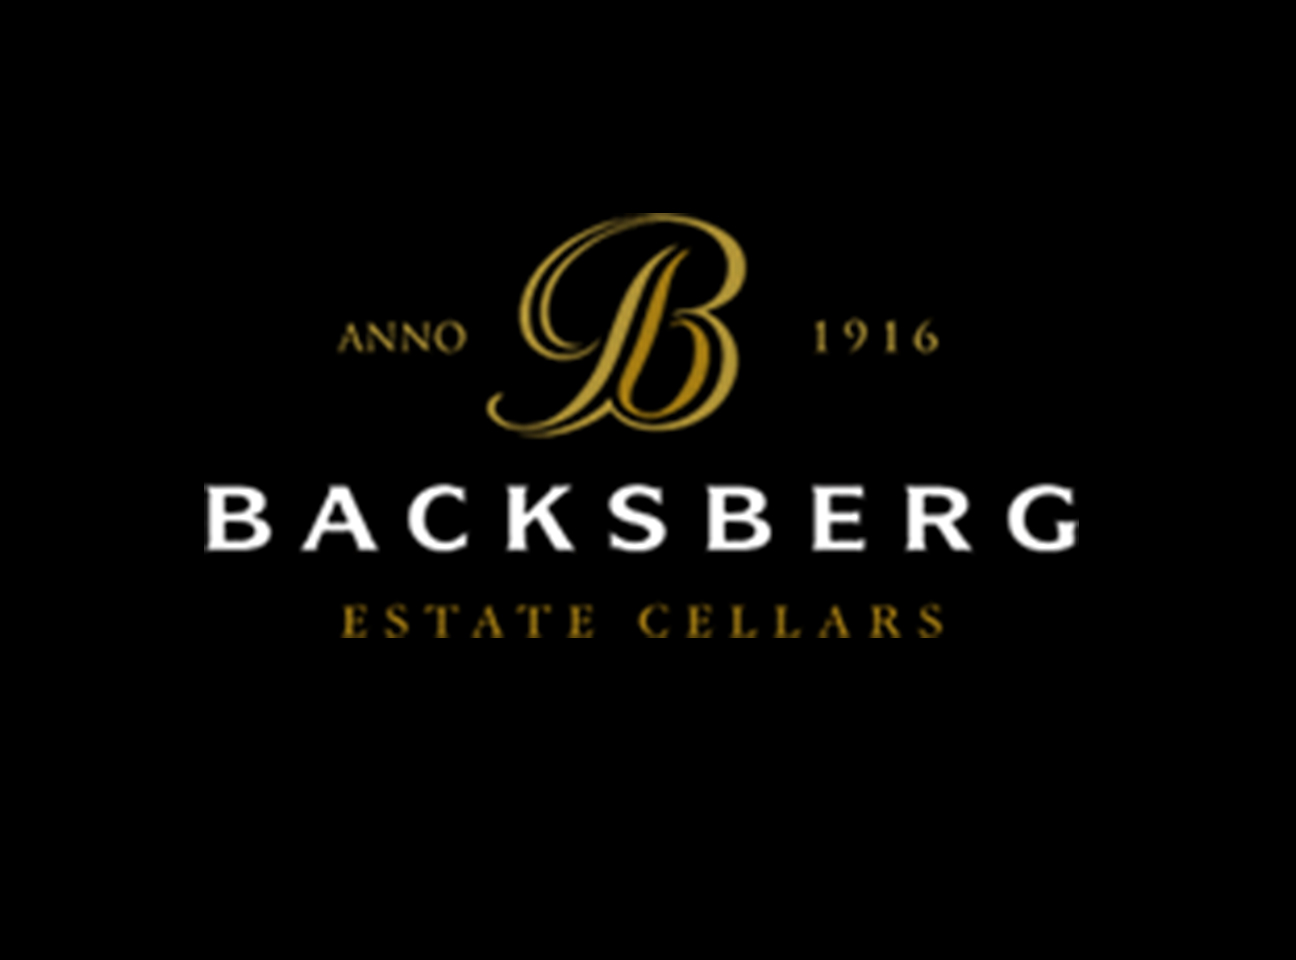 Backsberg Estate Cellars